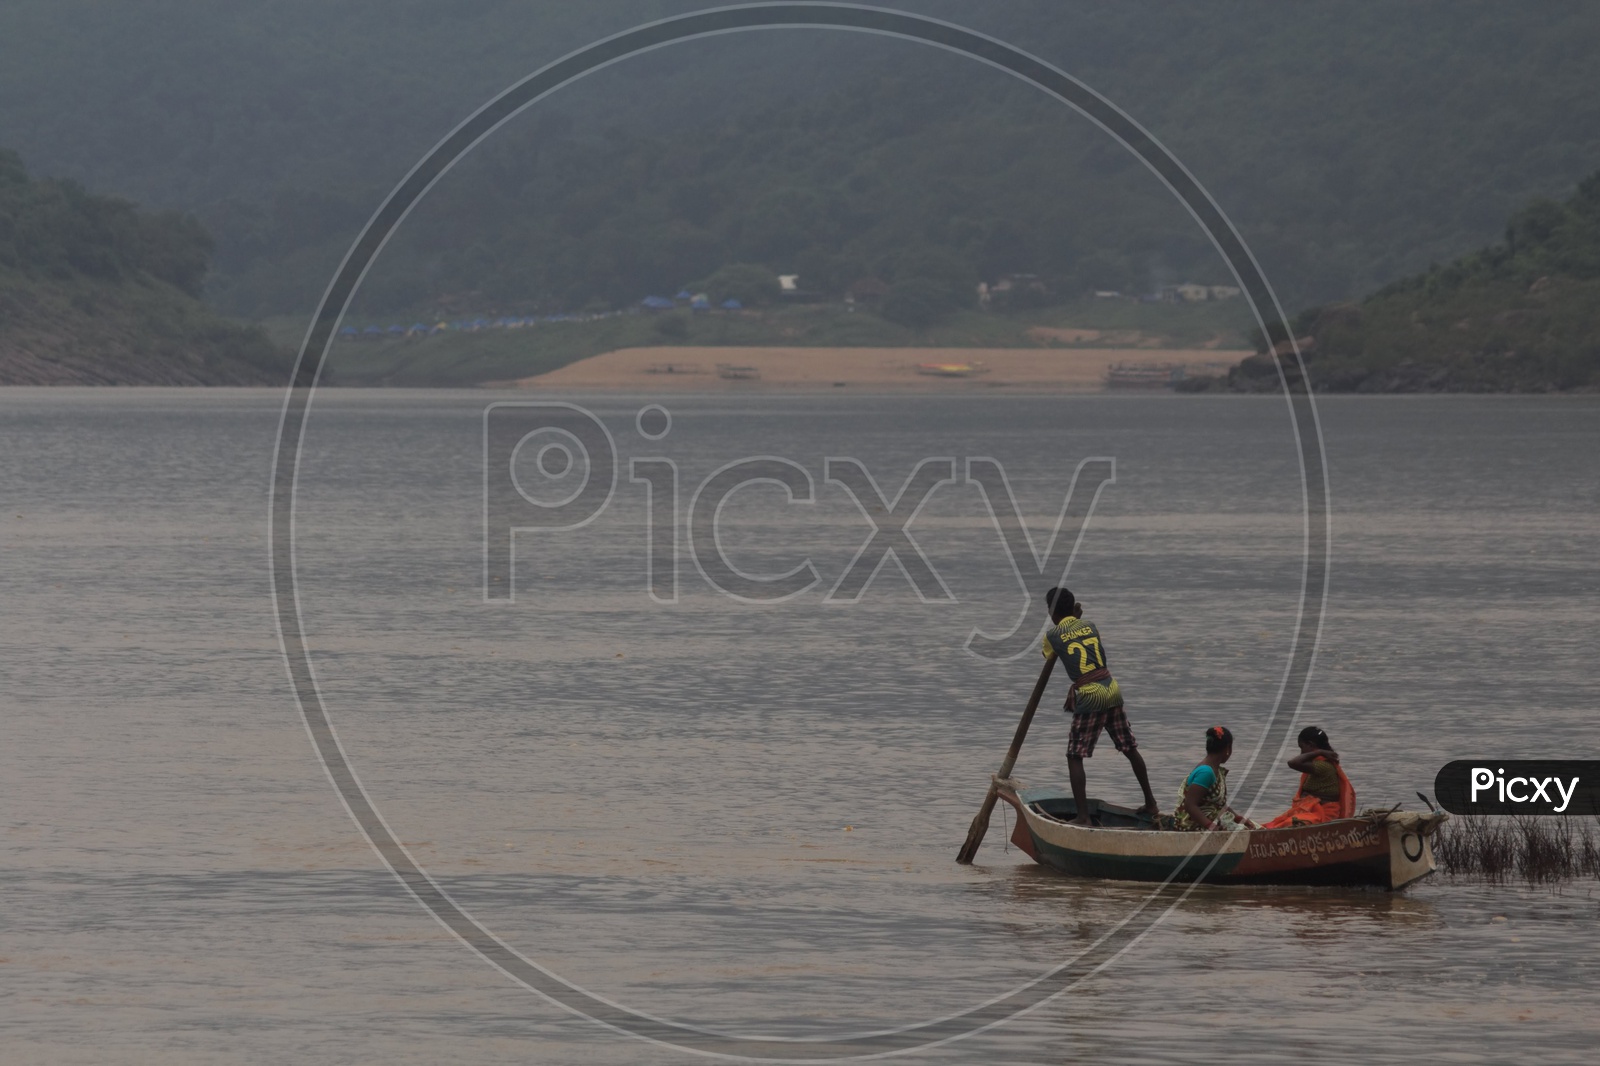 A Man rowing a boat on river godavari.